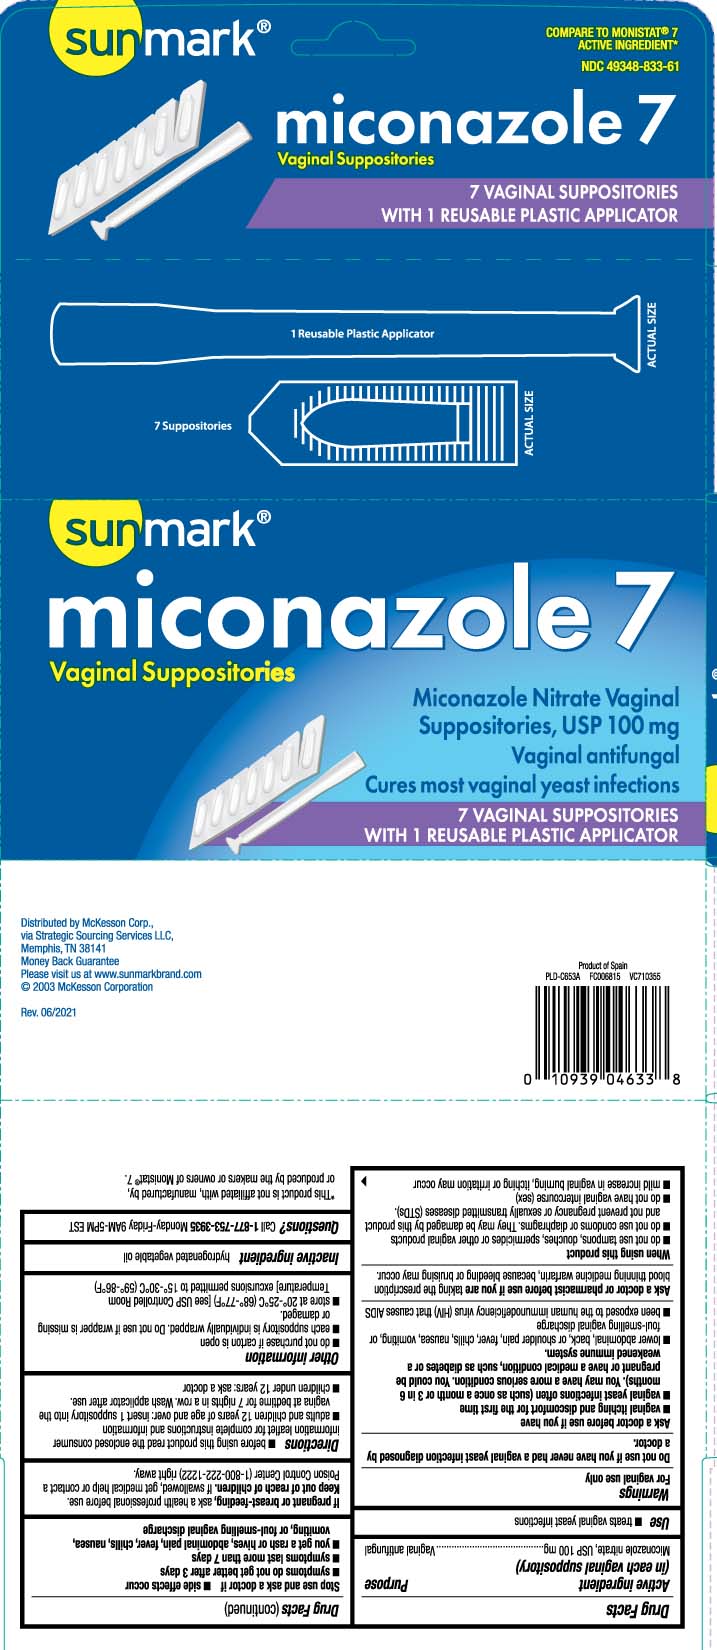 Miconazole nitrate, USP 100 mg